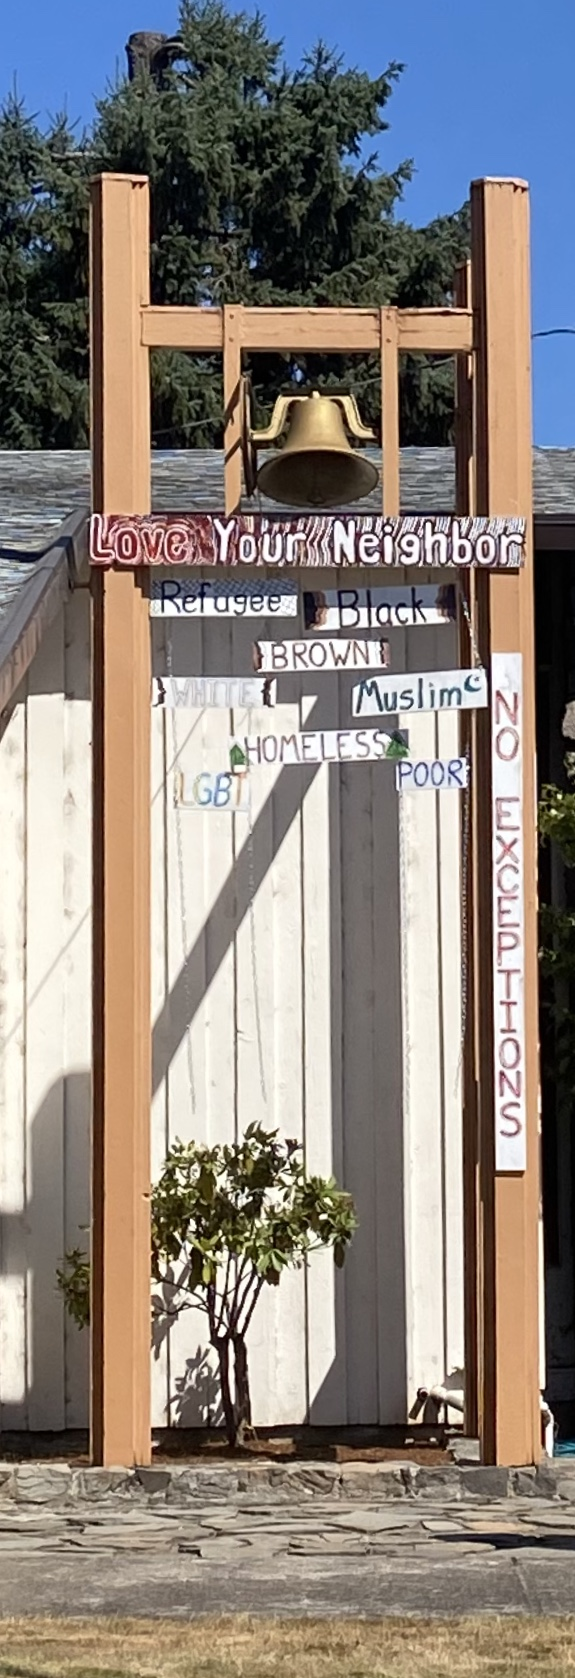 Welcoming sign on a community church near rural Oakridge, Oregon.